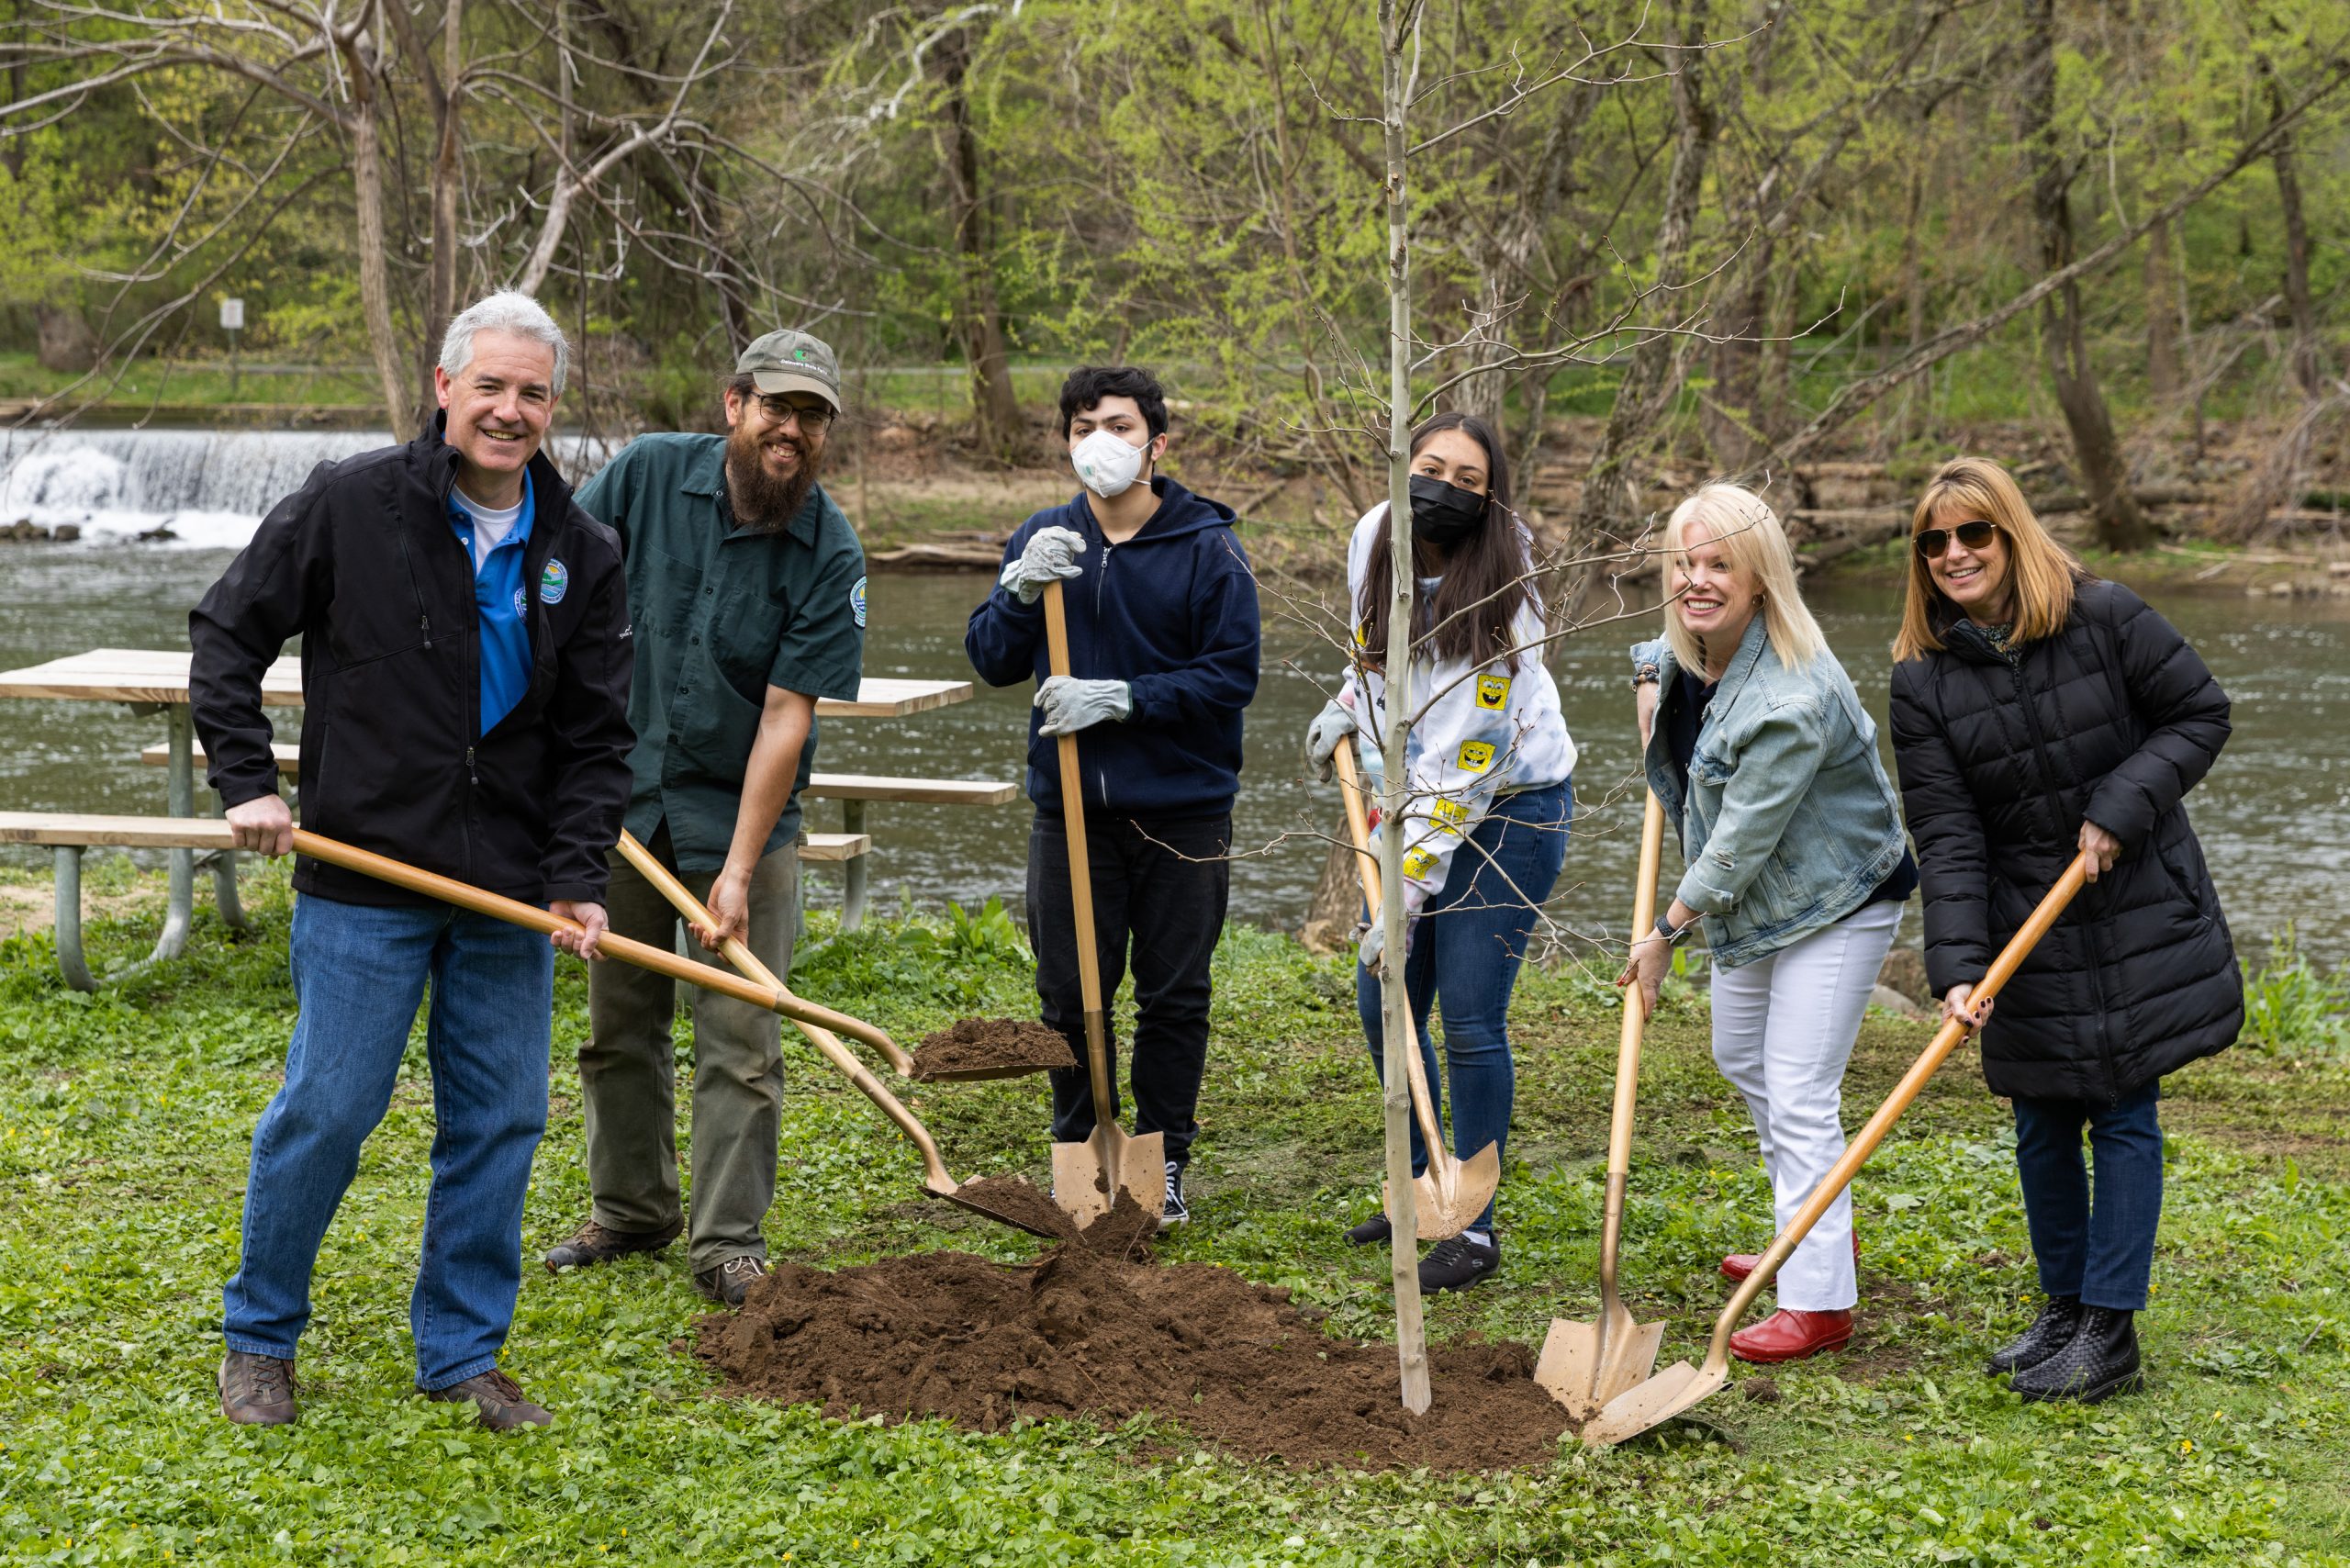 DNREC Volunteer Awards, Tree for Every Delawarean Planting Kick Off Earth Week at Brandywine Park – State of Delaware News